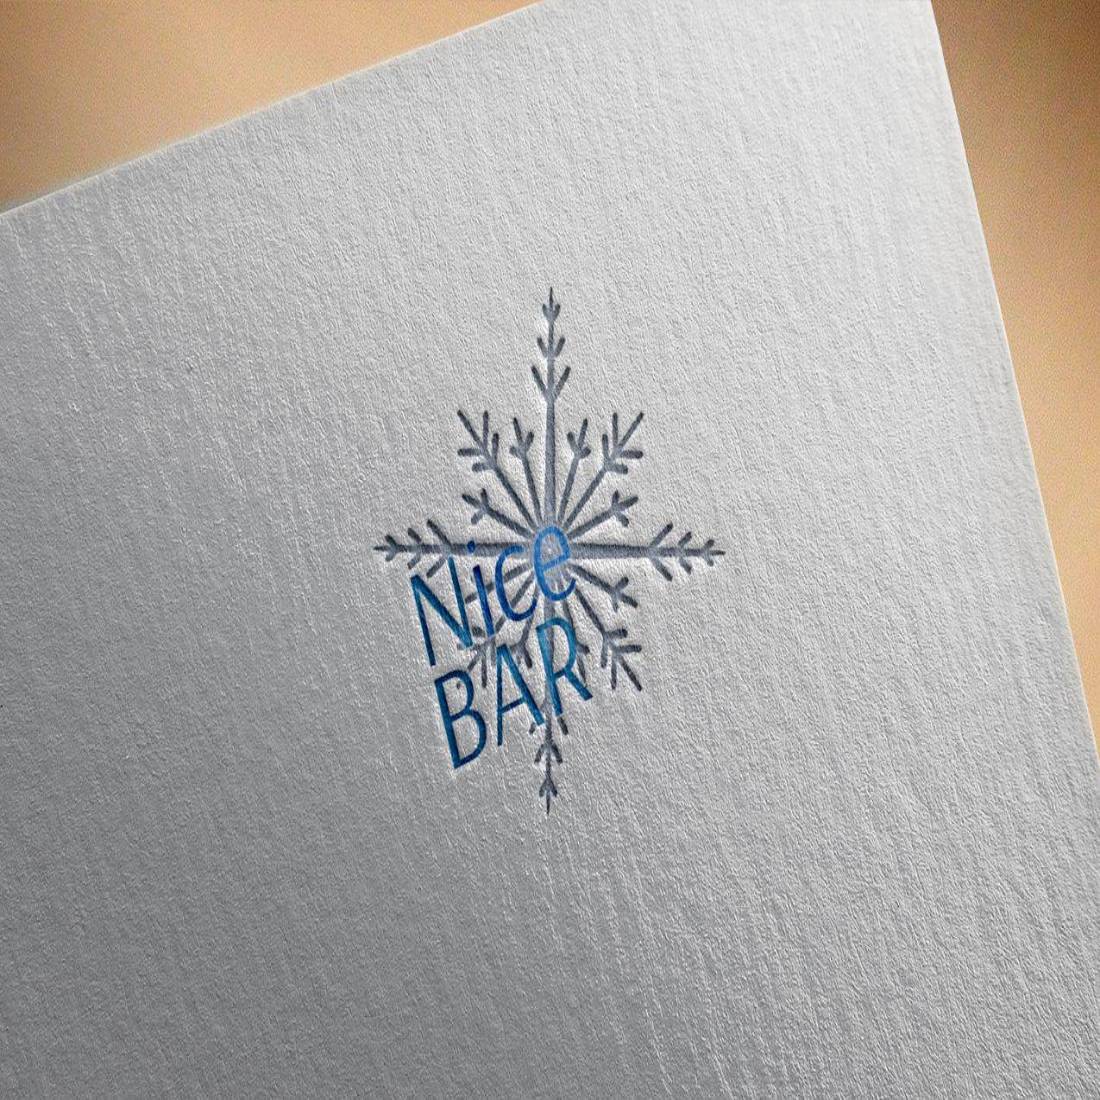 Nice Ice Bar Logo Design cover image.